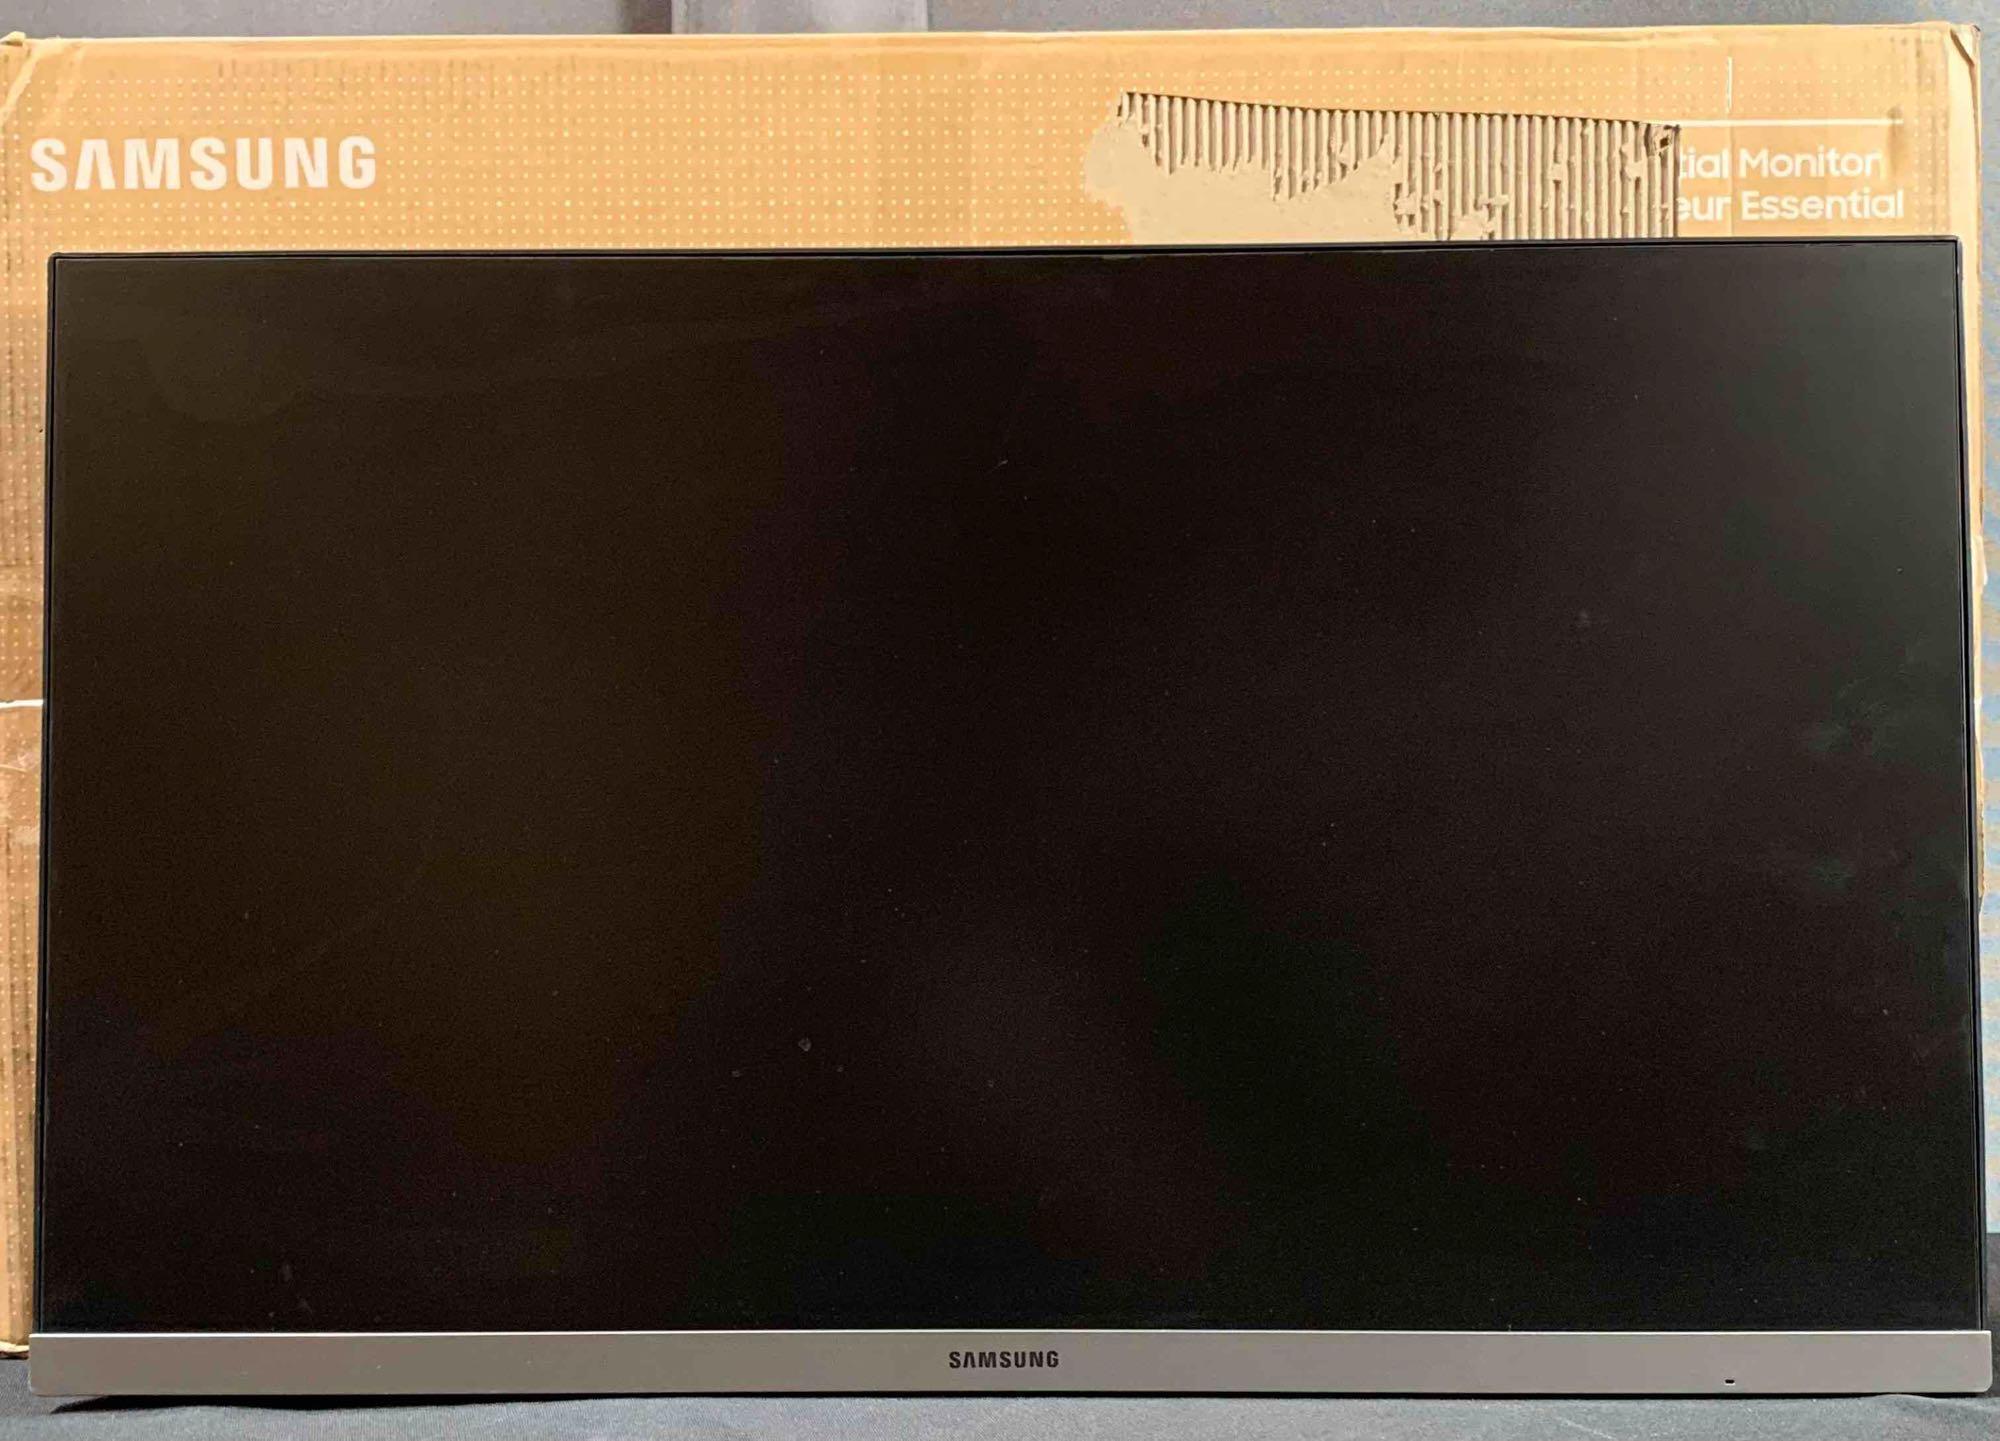 Samsung Business SR35 Series 24-Inch FHD 1080p Computer Monitor